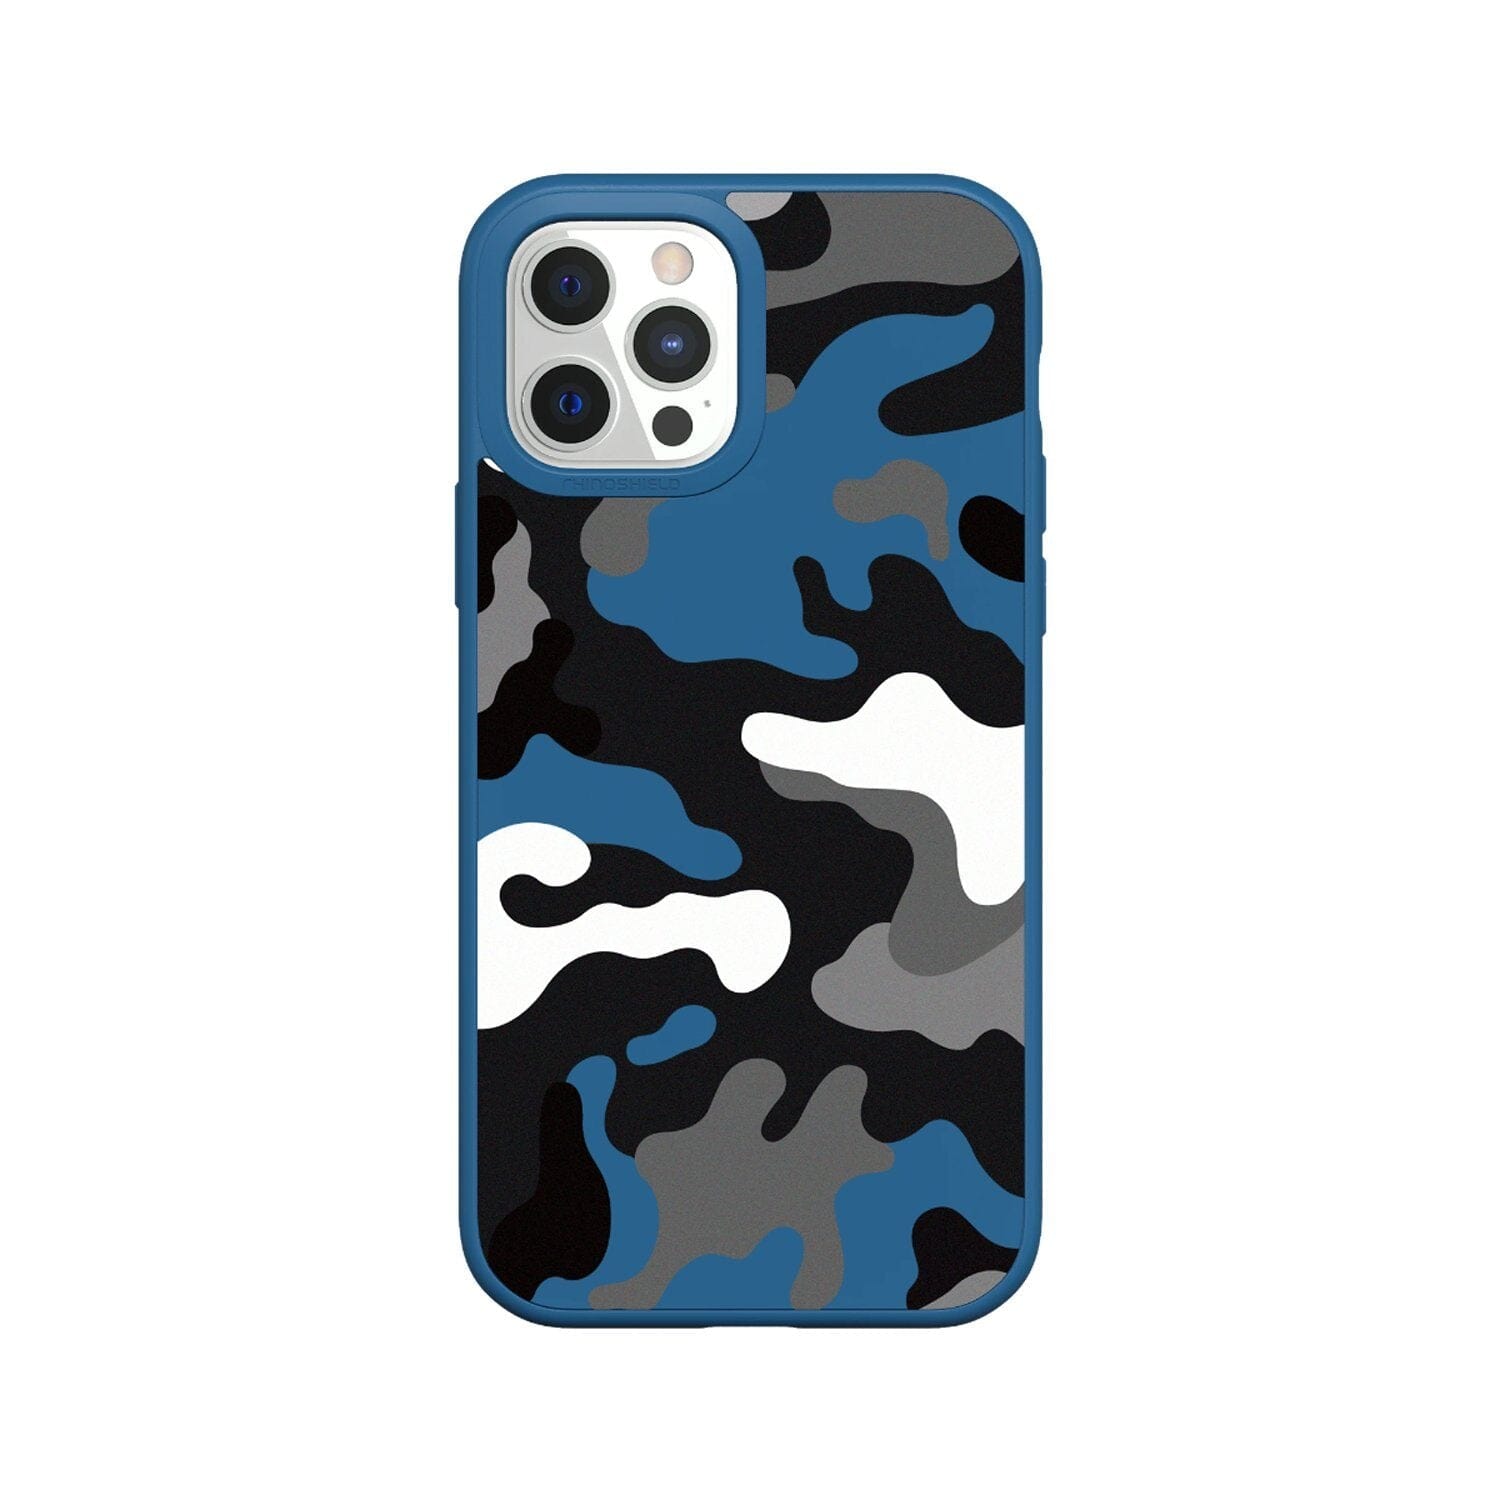 RhinoShield SolidSuit Design Case for iPhone 12 Series (2020) Default RhinoShield iPhone 12 Pro Max 6.7" Royal Blue/Telo Mimetico B&W Camo 